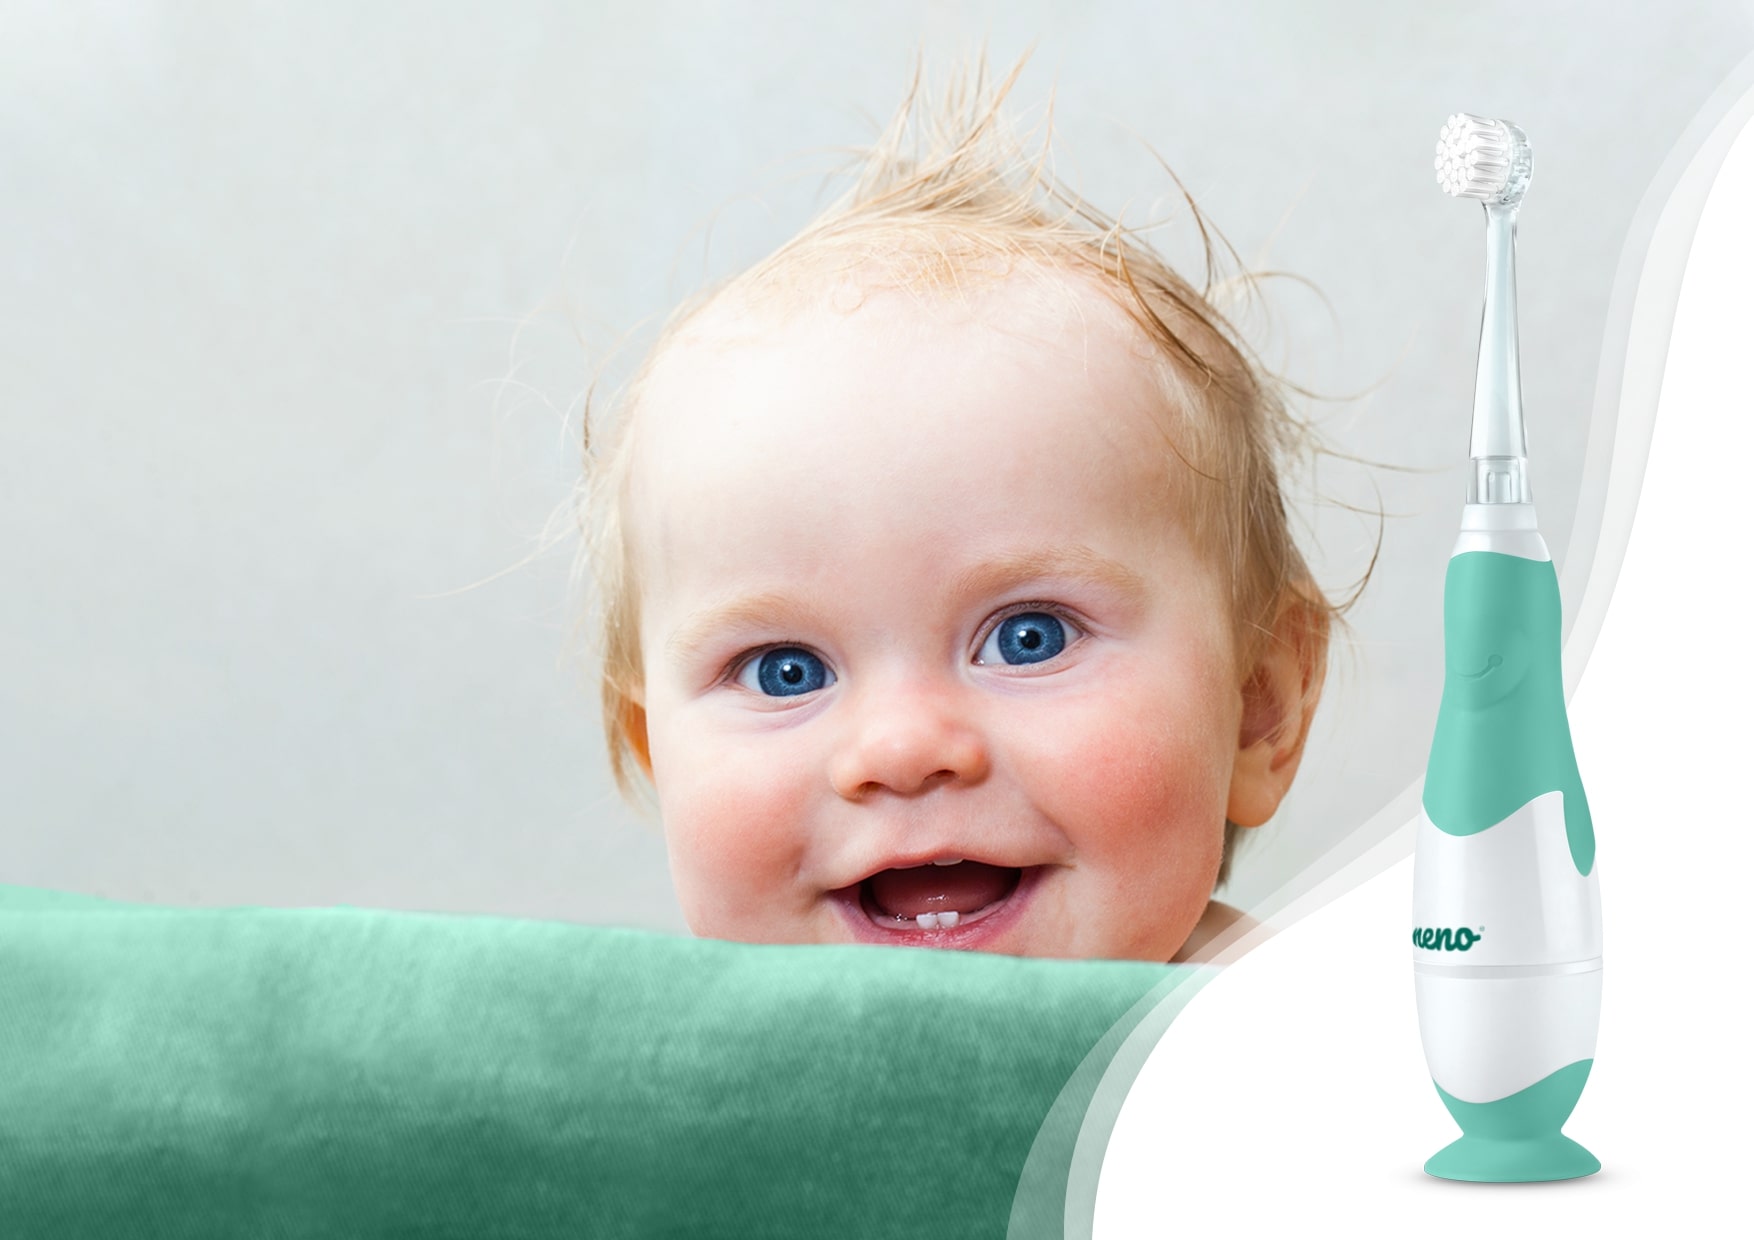 Neno Denti electronic toothbrush for children